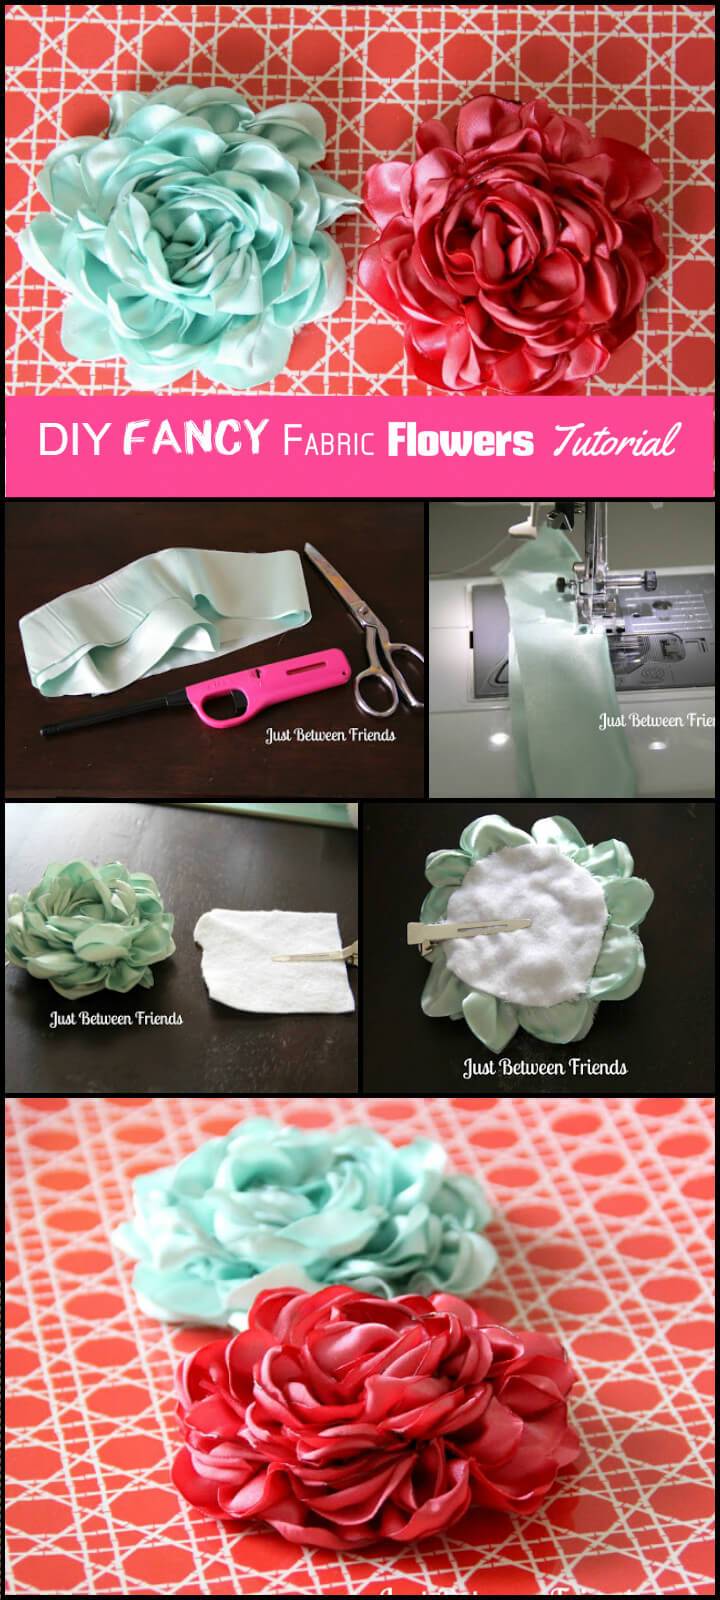 DIY fancy fabric flowers tutorial